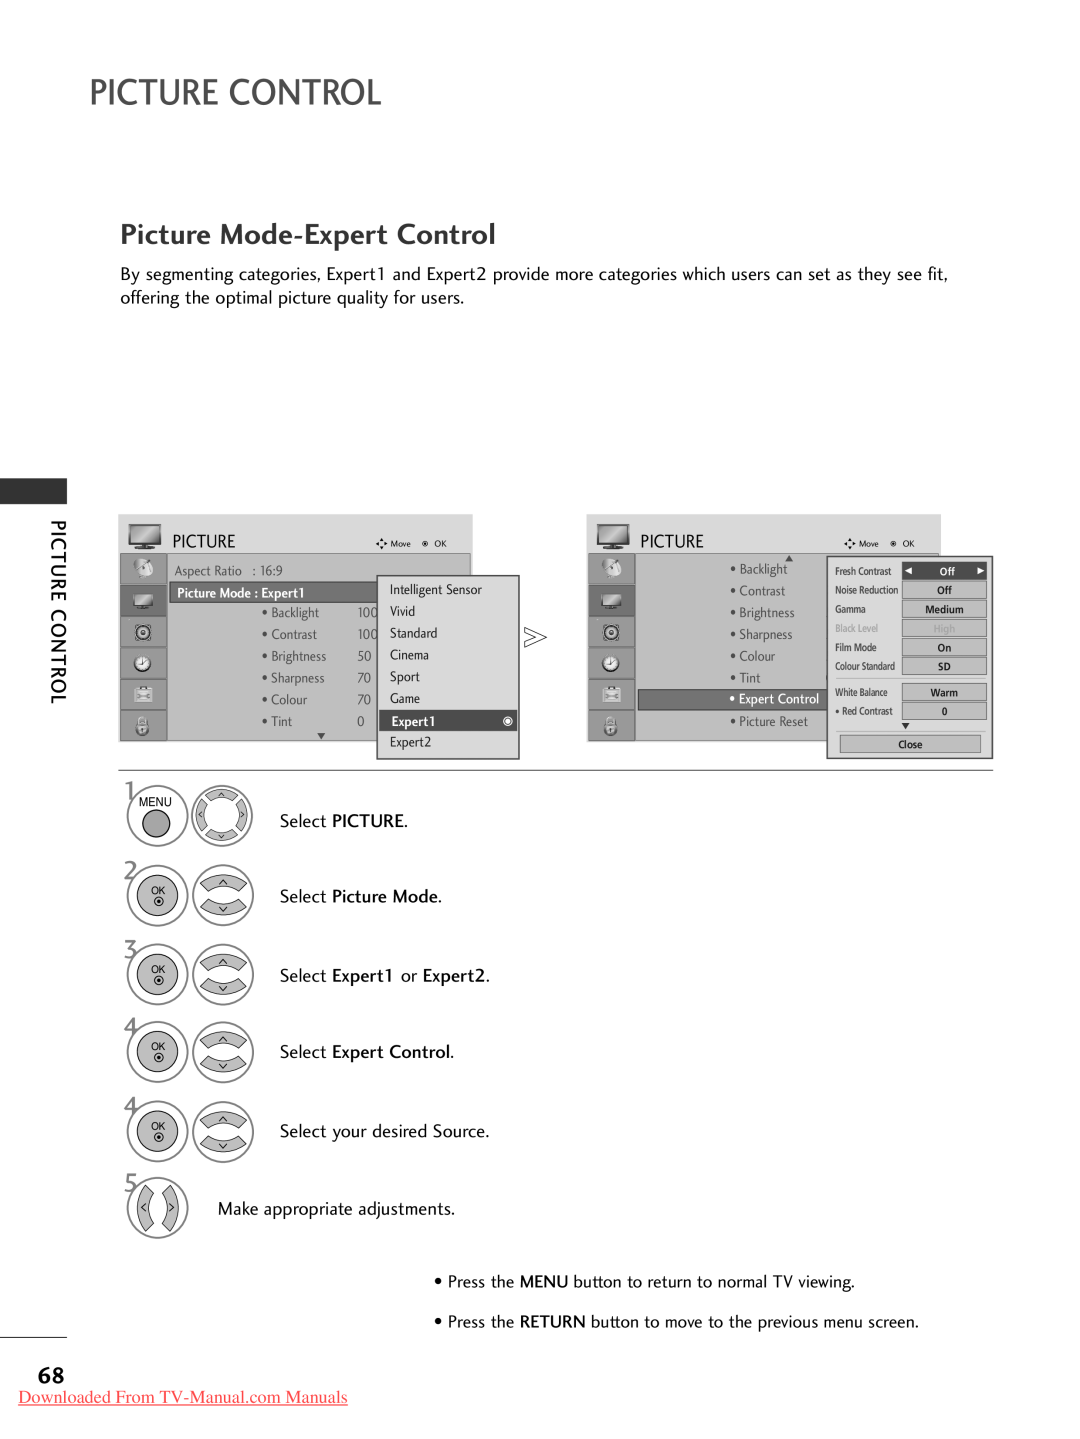 LG Electronics 4 42 2L LG G5 50, 42 2P PG G3 30 Picture Mode-Expert Control, Picture Control, Select Expert1 or Expert2 